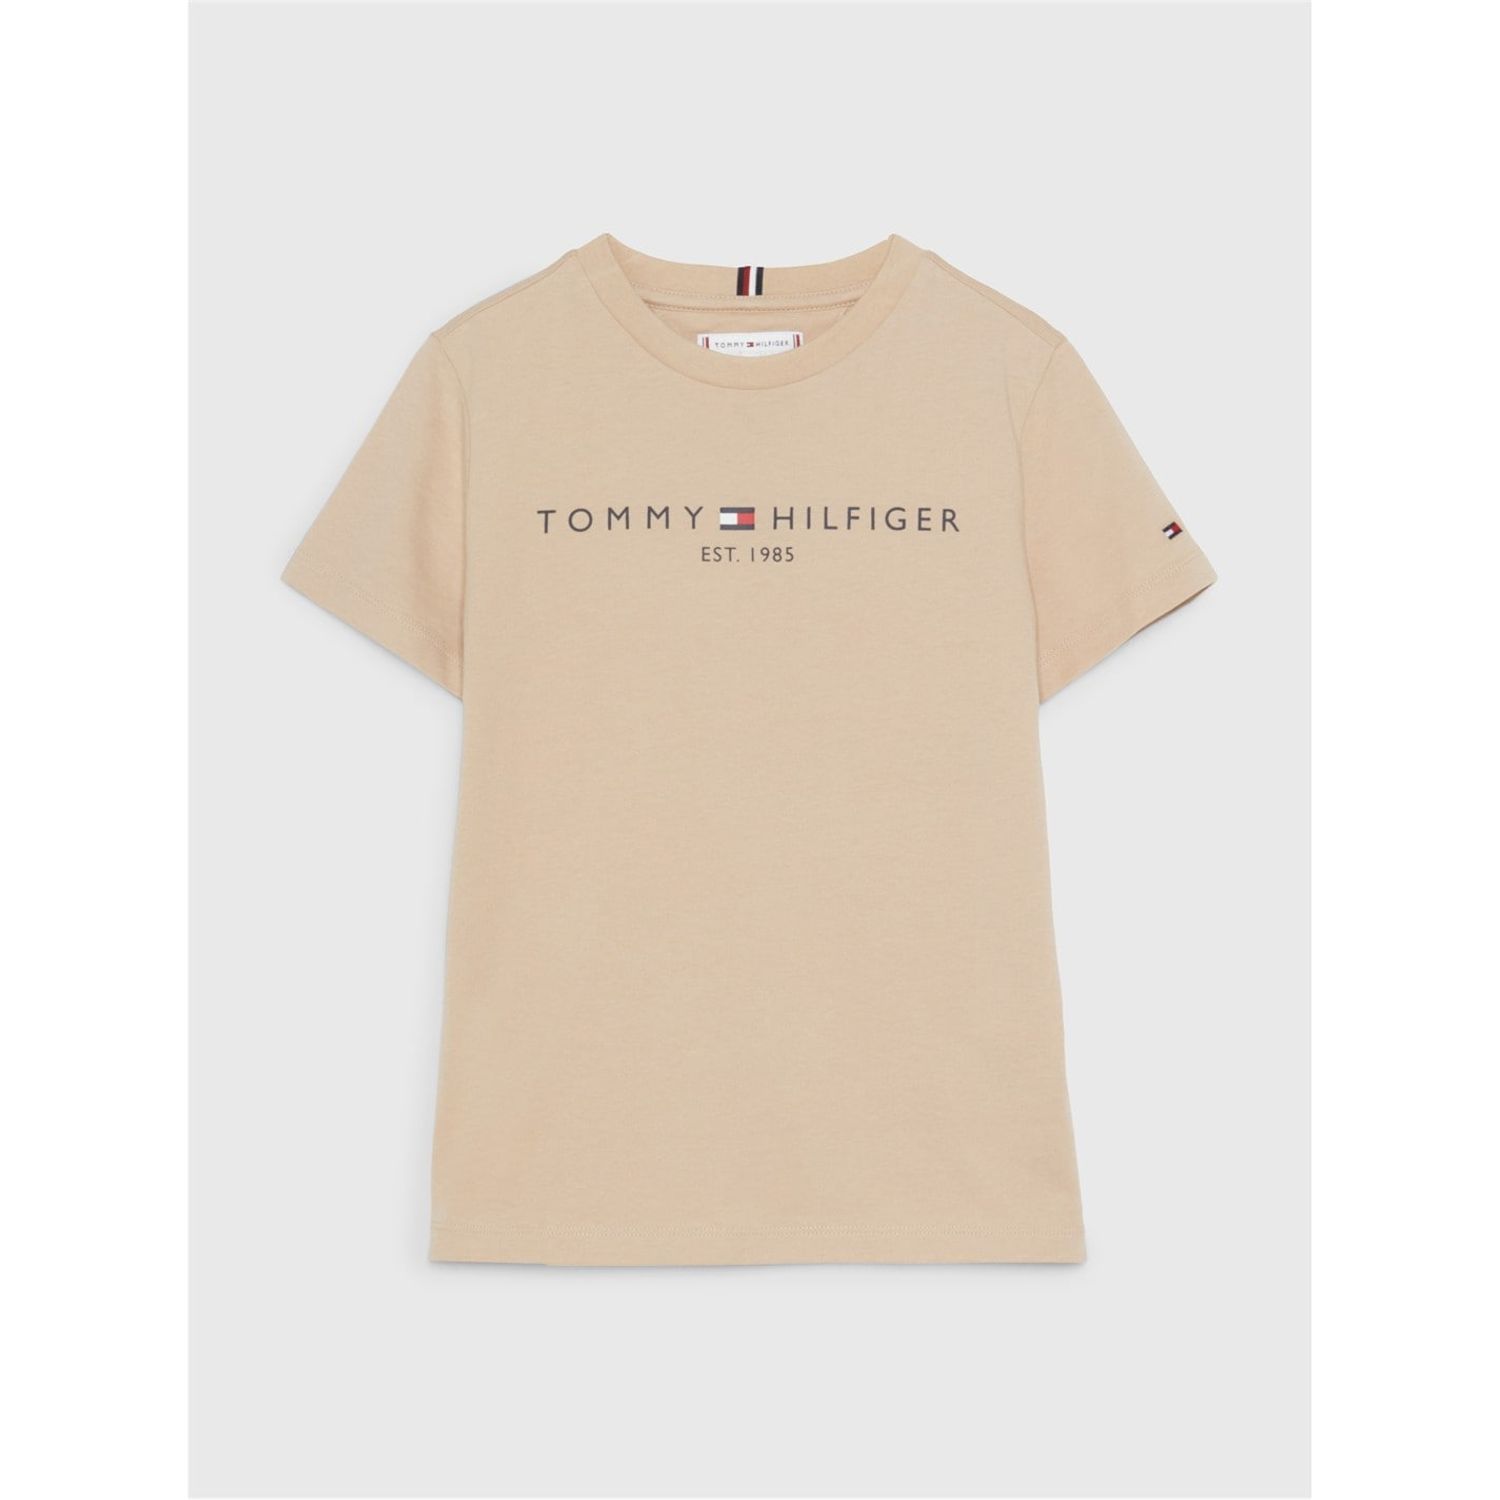 Hilfiger T-Shirt Get Tommy Label - The Boys Beige Essential